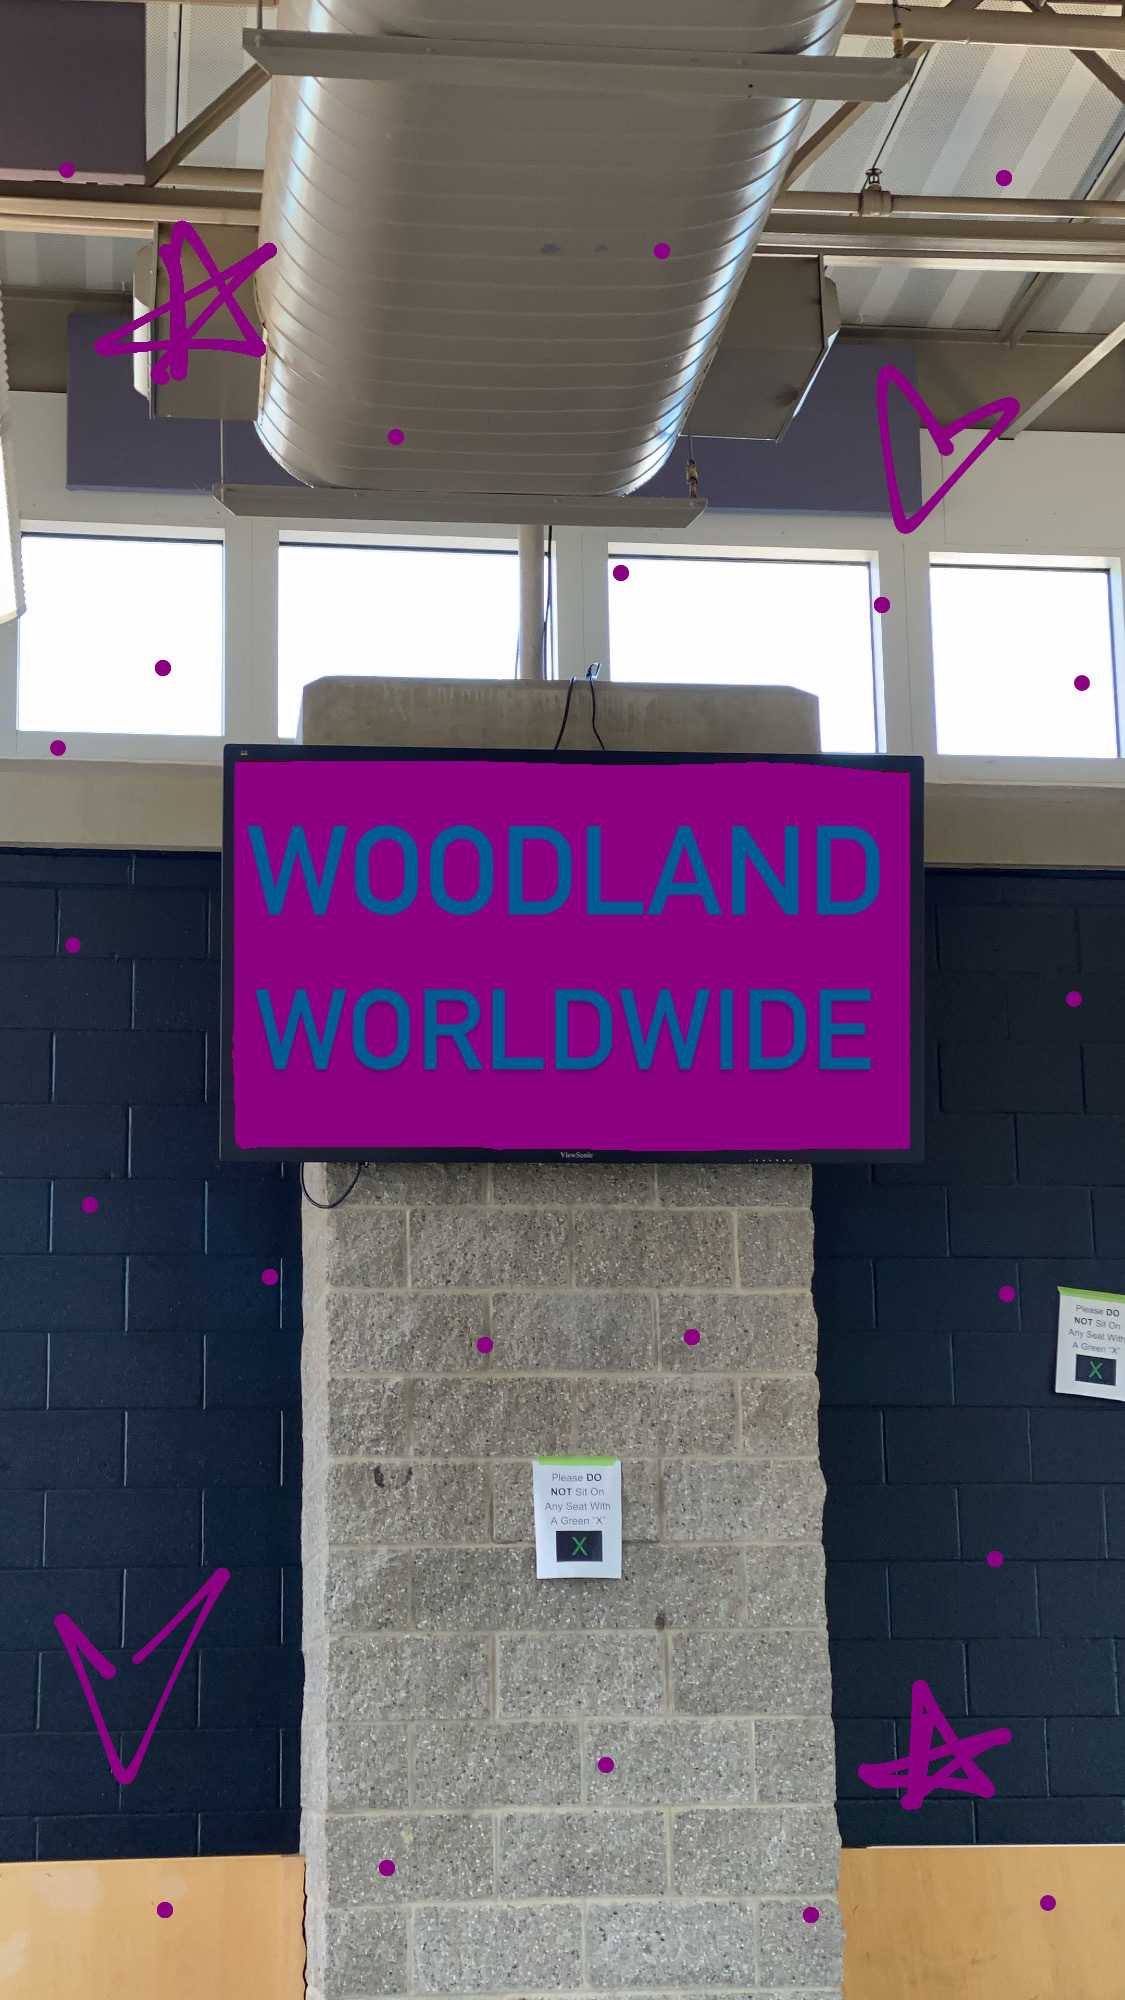 Woodland Worldwide Improving the School’s Community